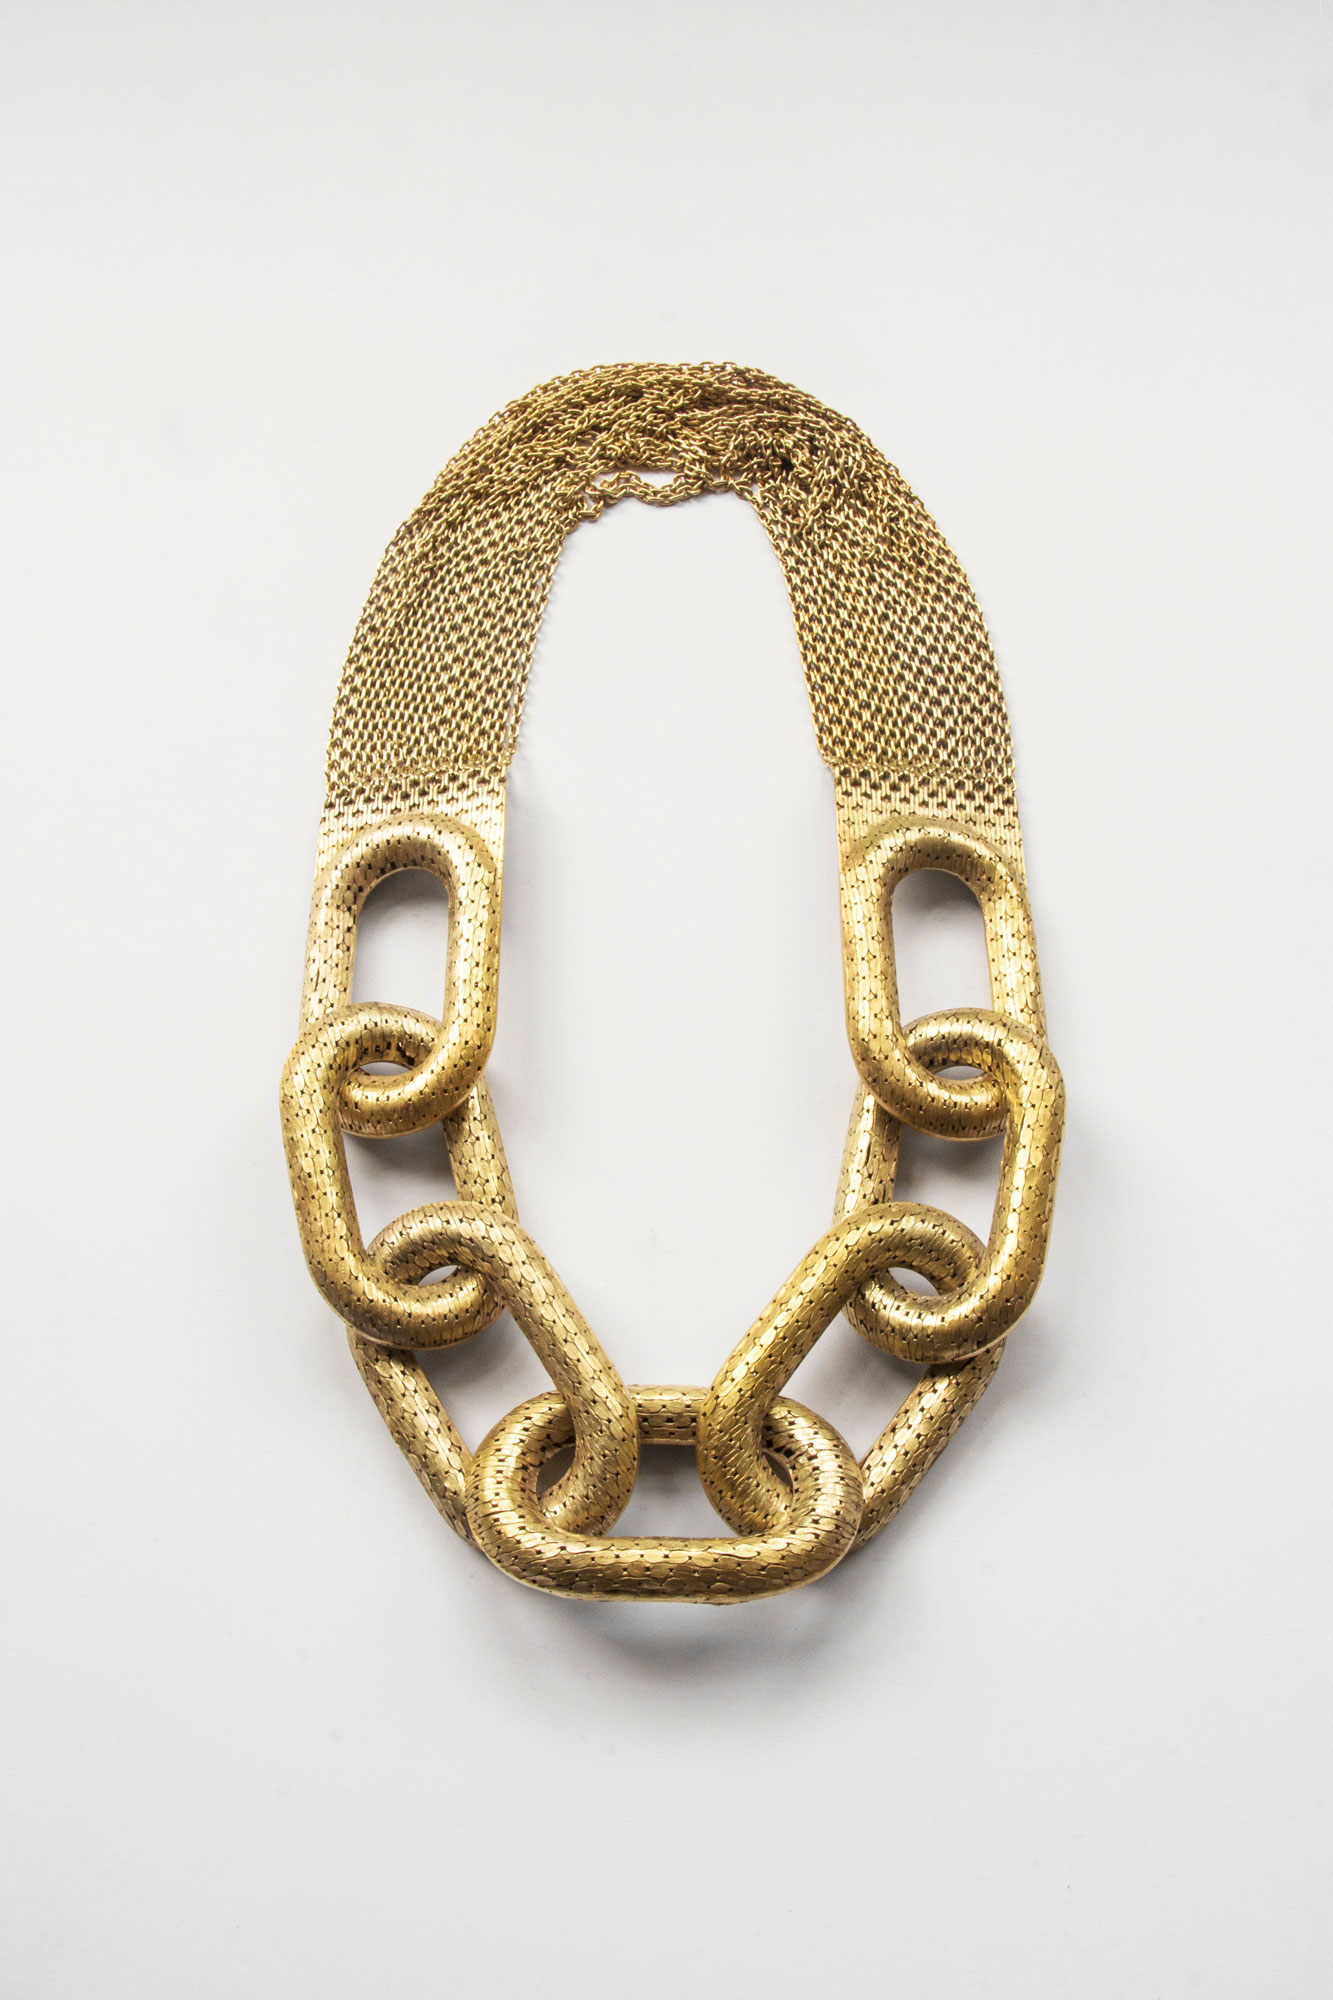 Fabian Veronika - Biglink necklace - Chaîne plaquée or. Soudée, aplatie et pressée - 30 x 20 x 4 cm - 2018